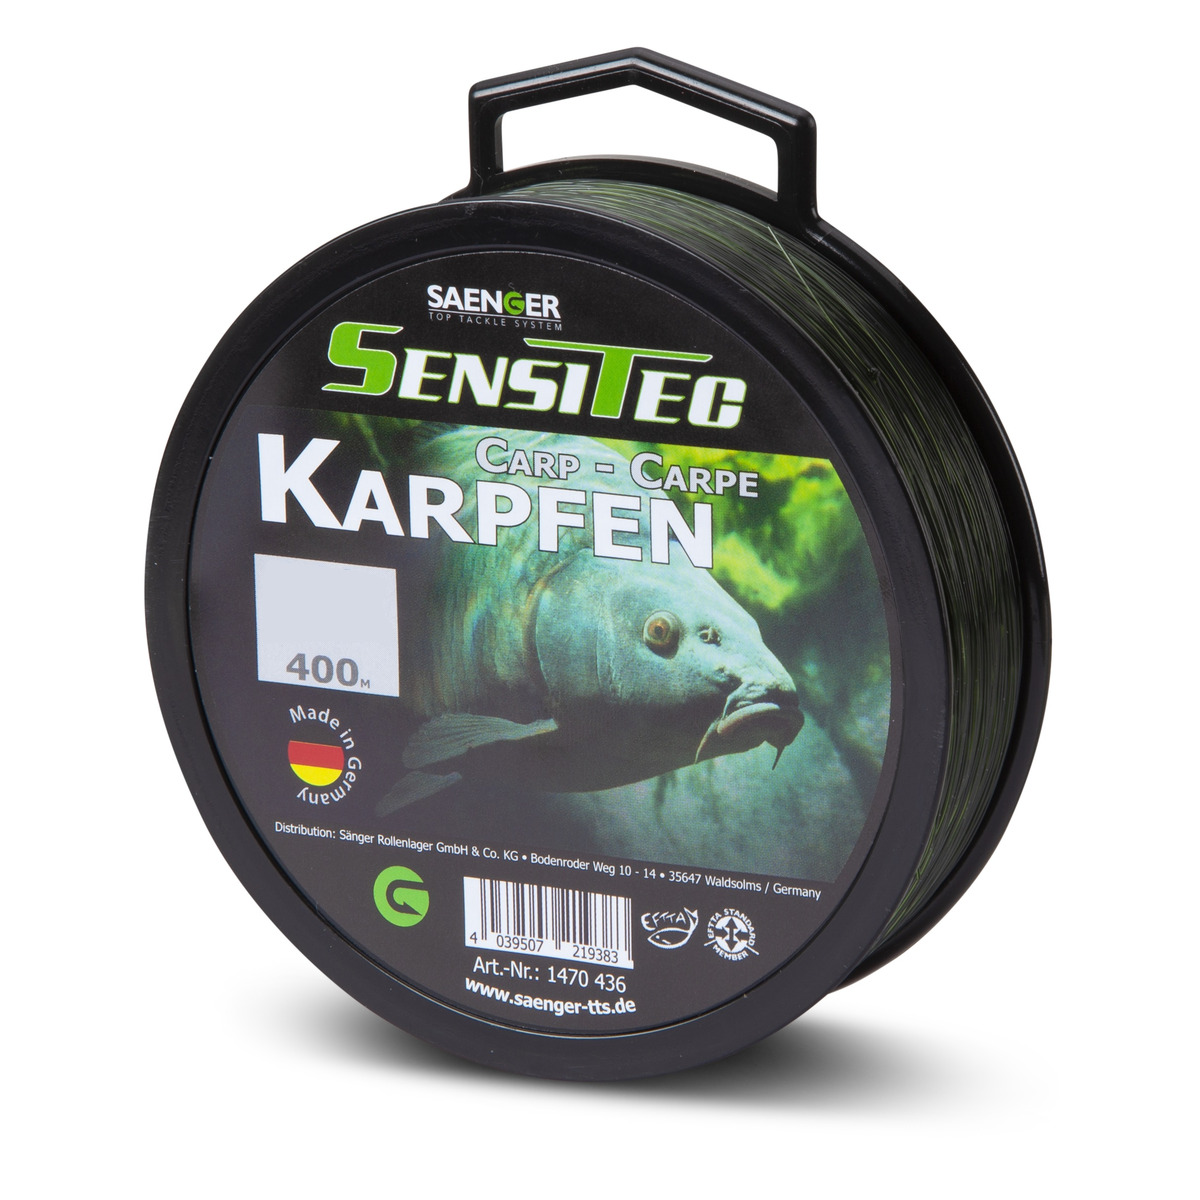 Sensitec Karpfen camou green 400 m - 0.33 mm